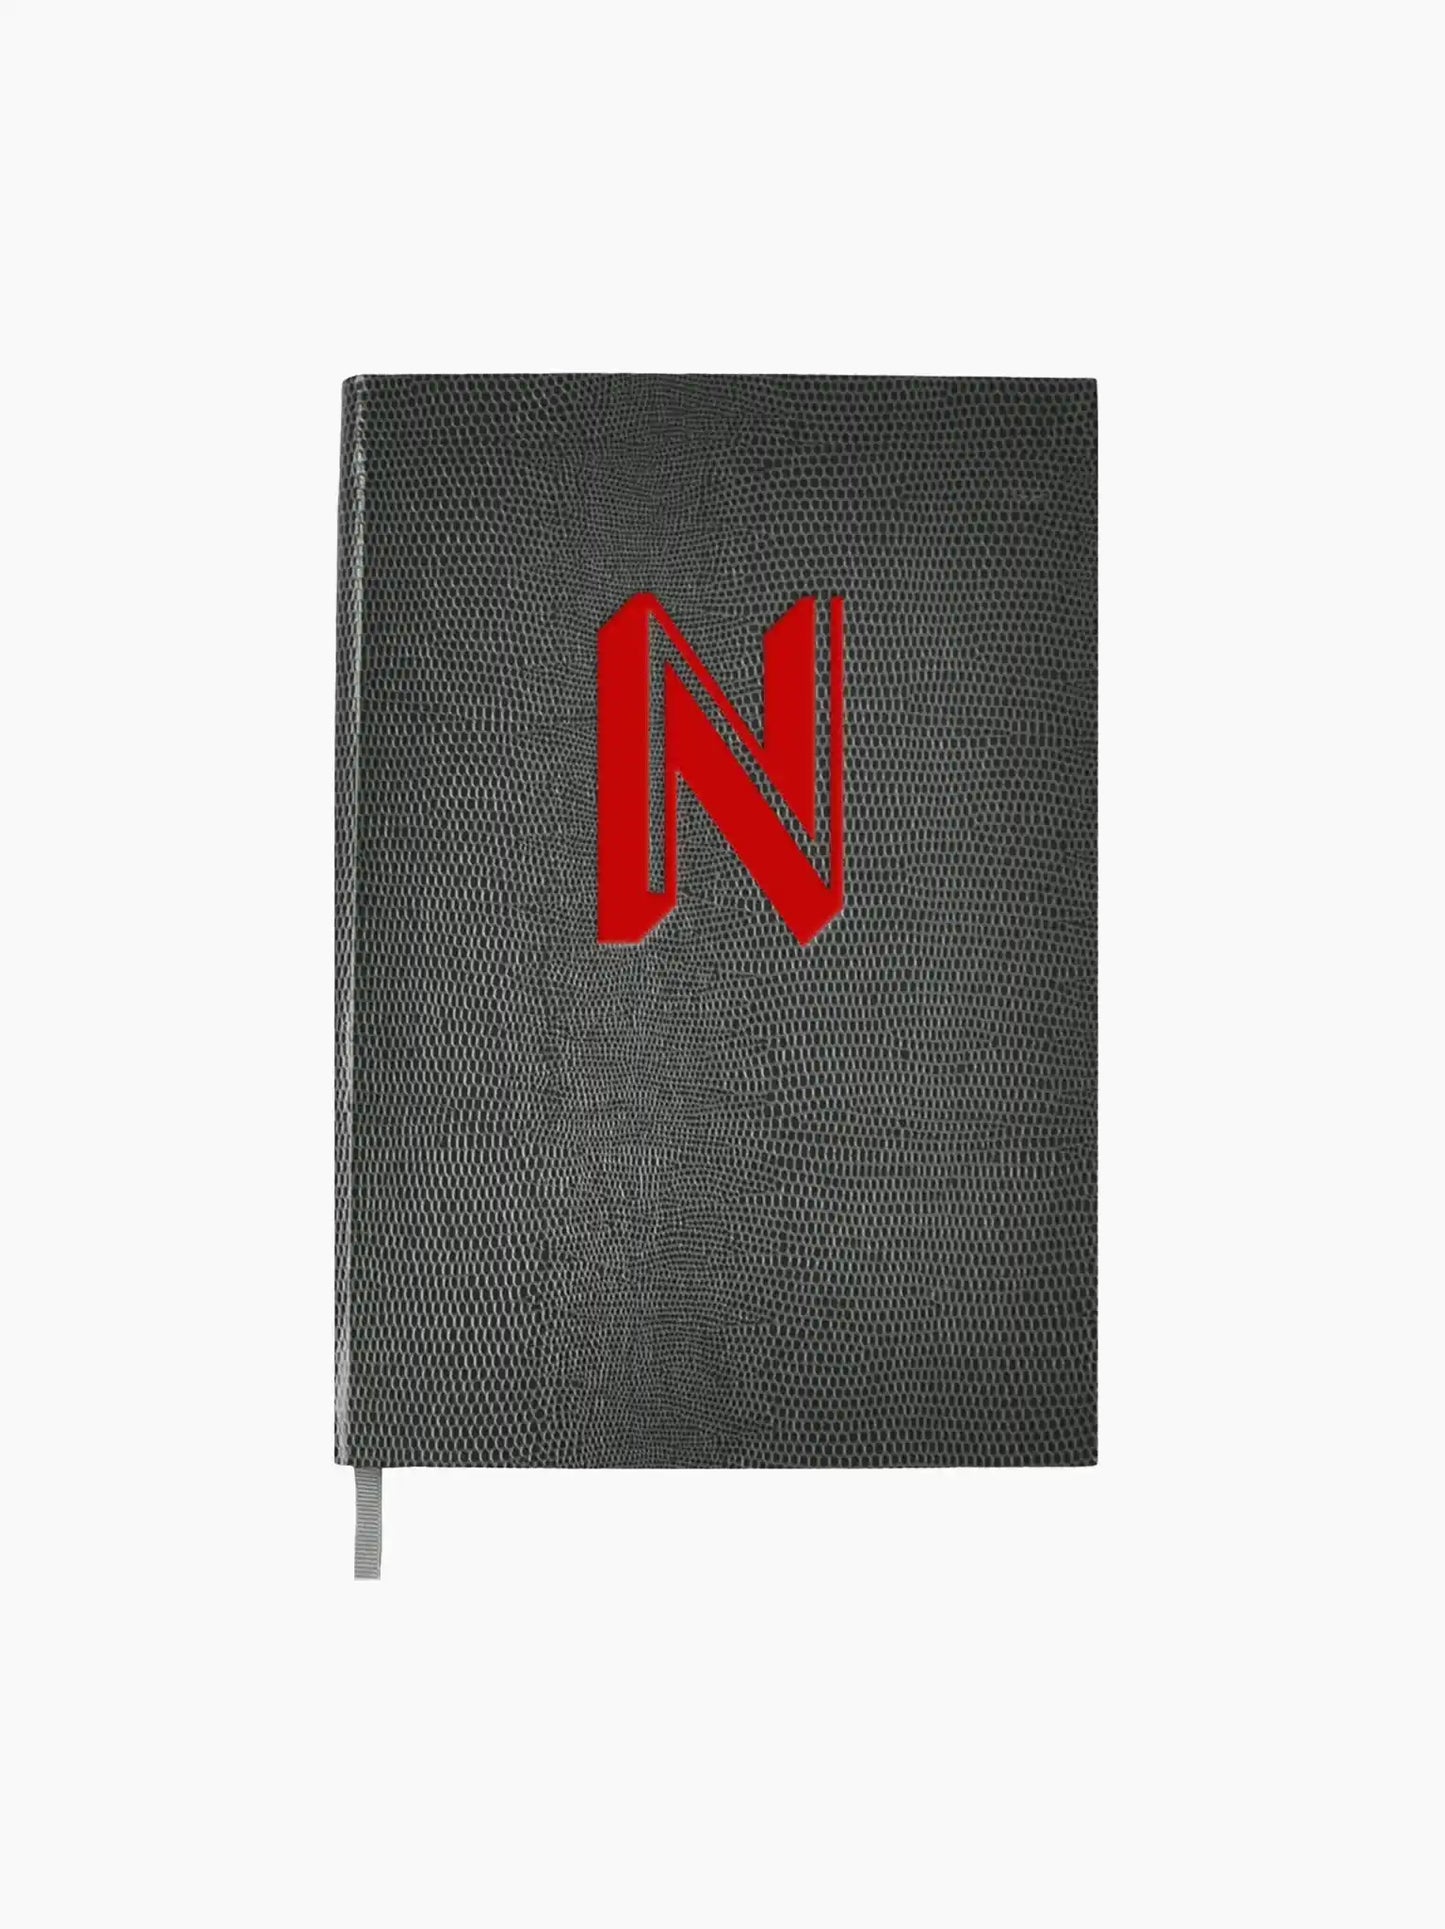 Alphabet Notebook